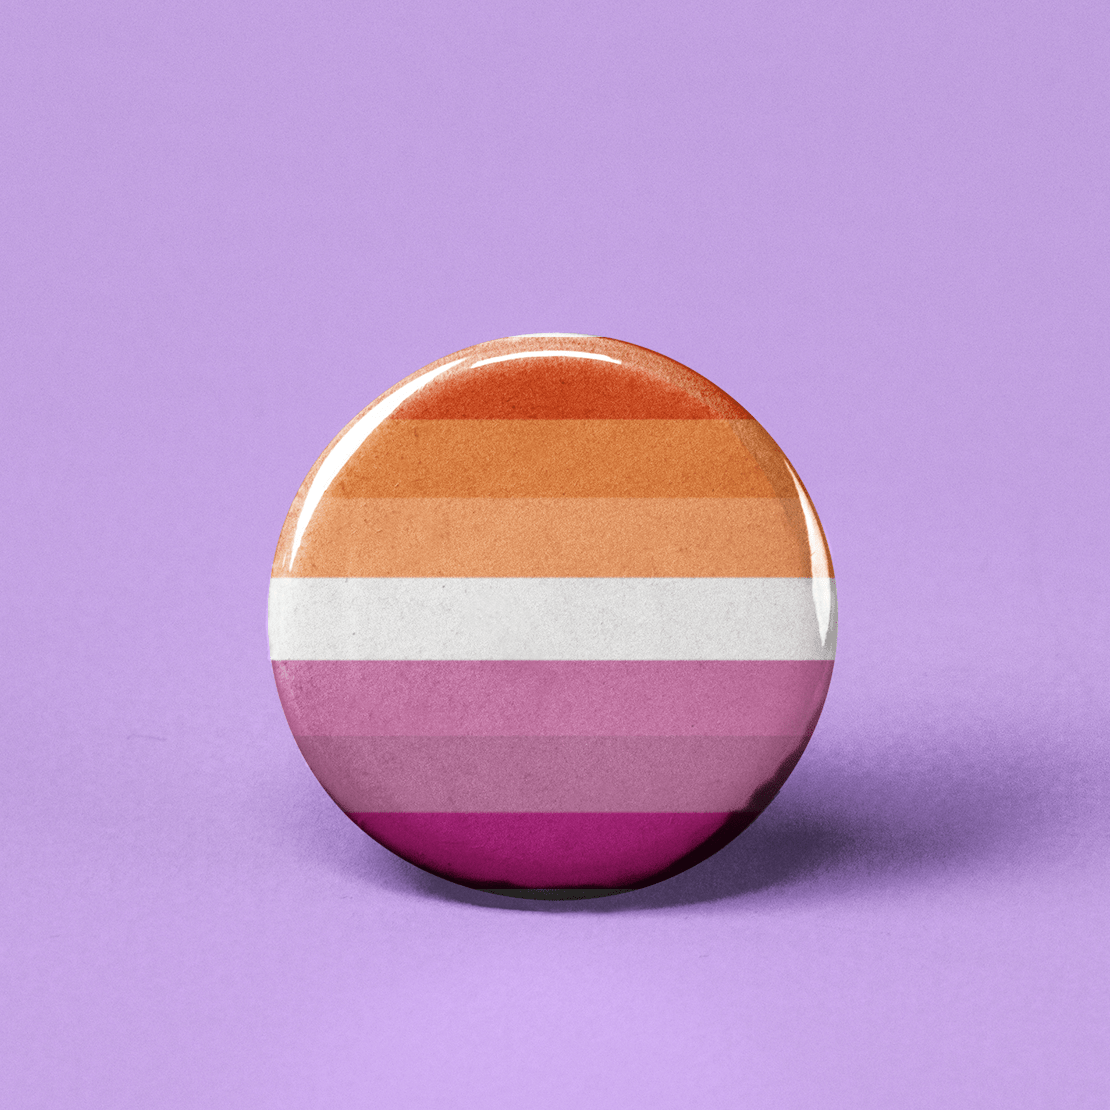 Lesbian Pride Flag Pinback Button - Spiral Circle